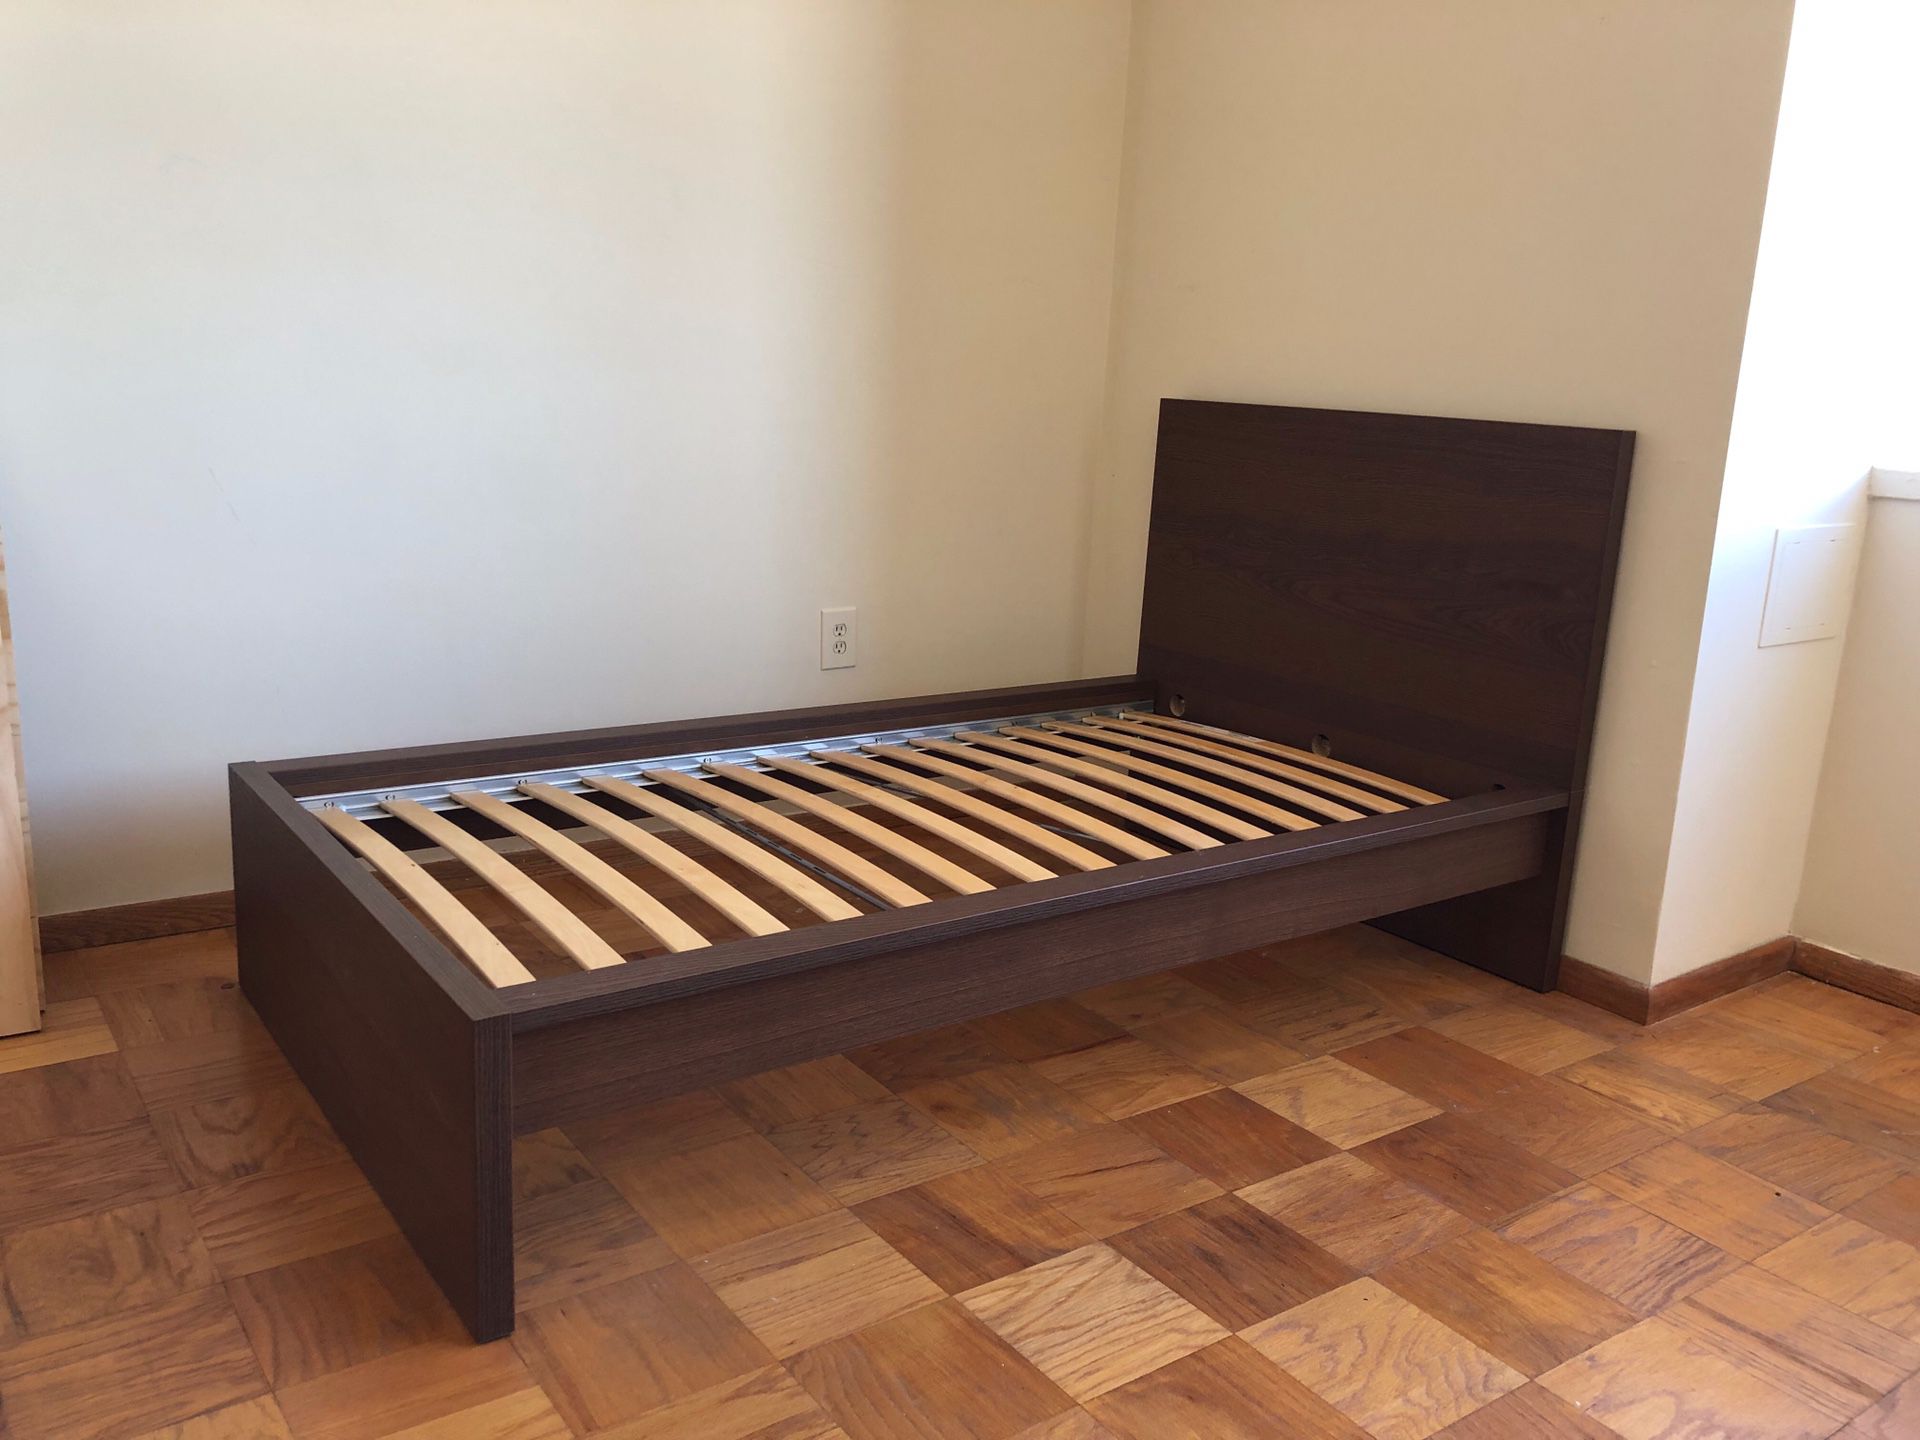 IKEA Malm Twin Bed with Slats